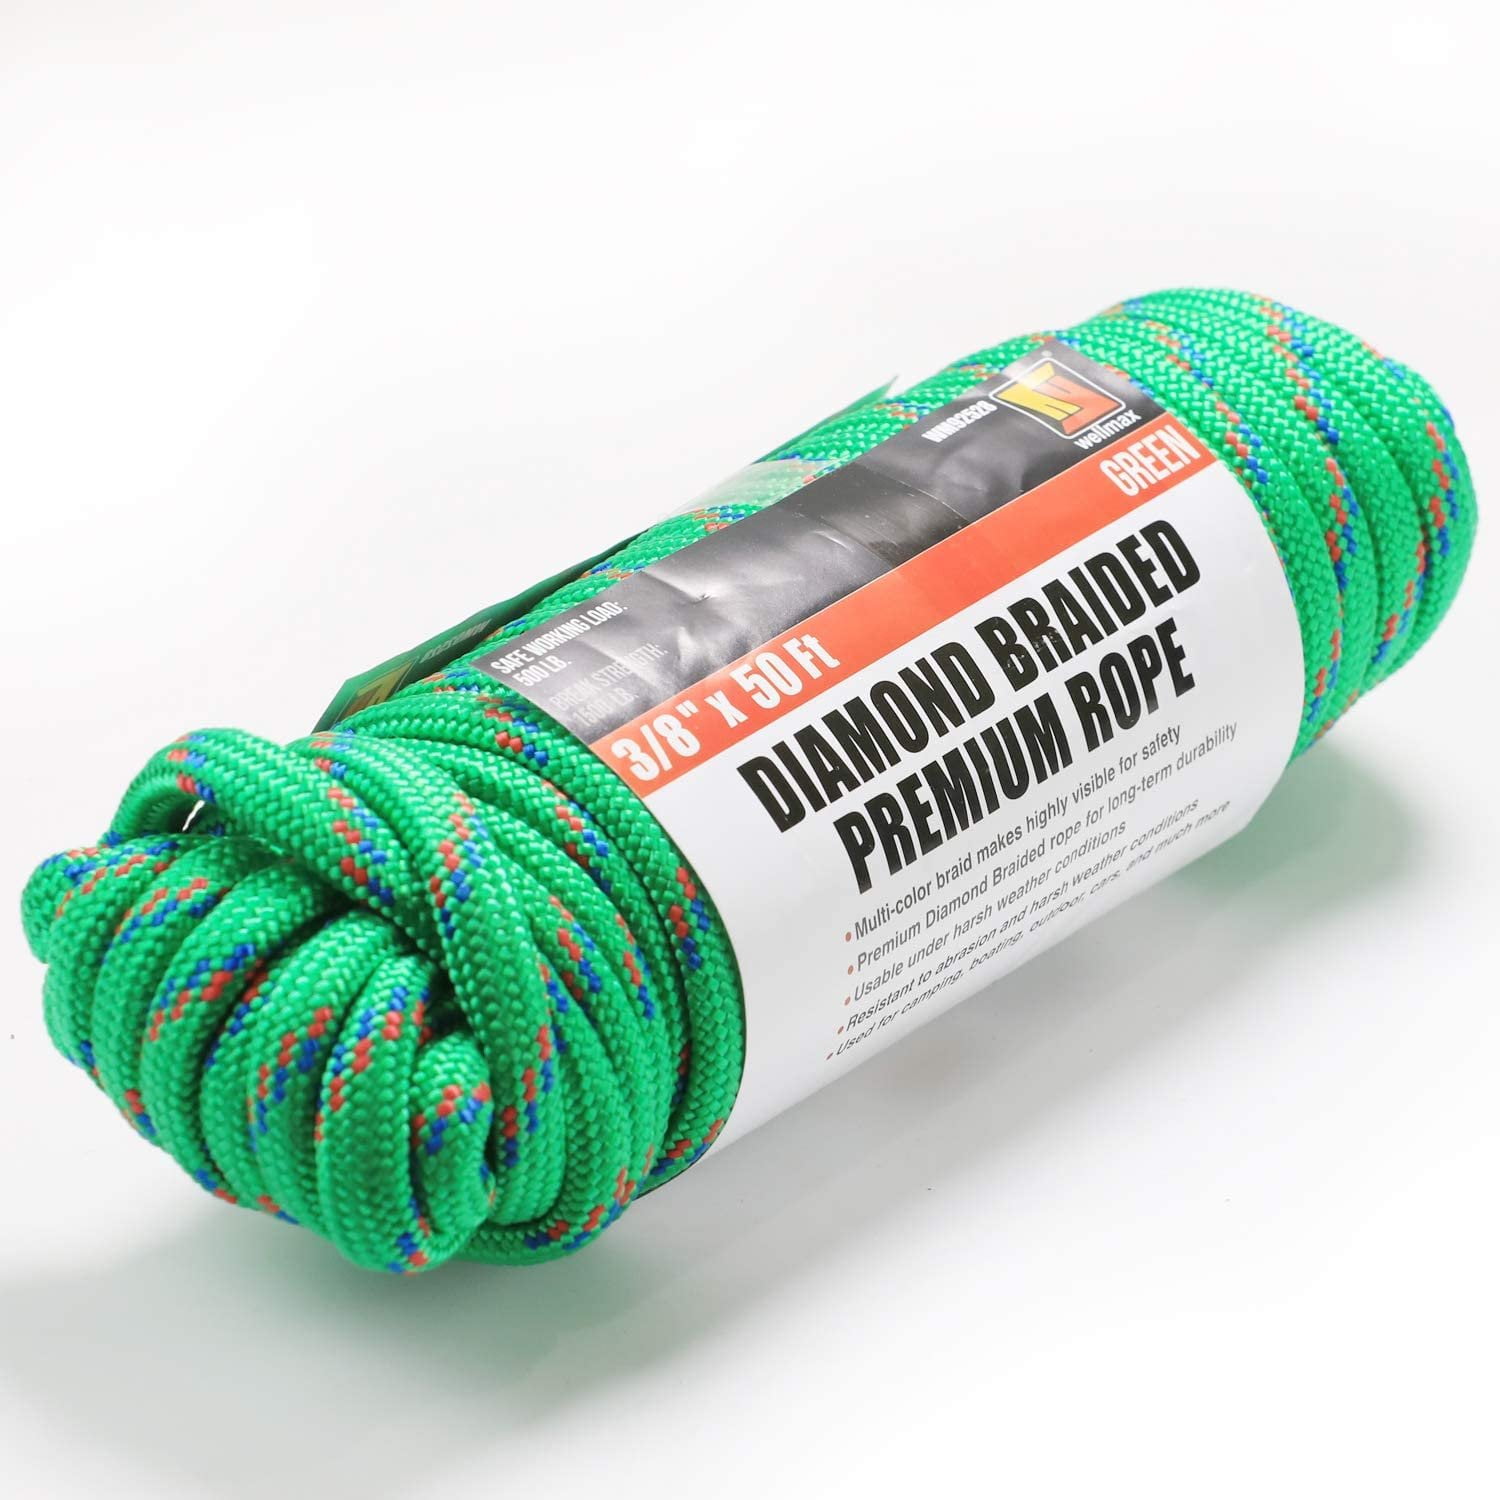 Wellmax Diamond Braid Nylon Rope, 3/8 inch by 50 Feet Green Color